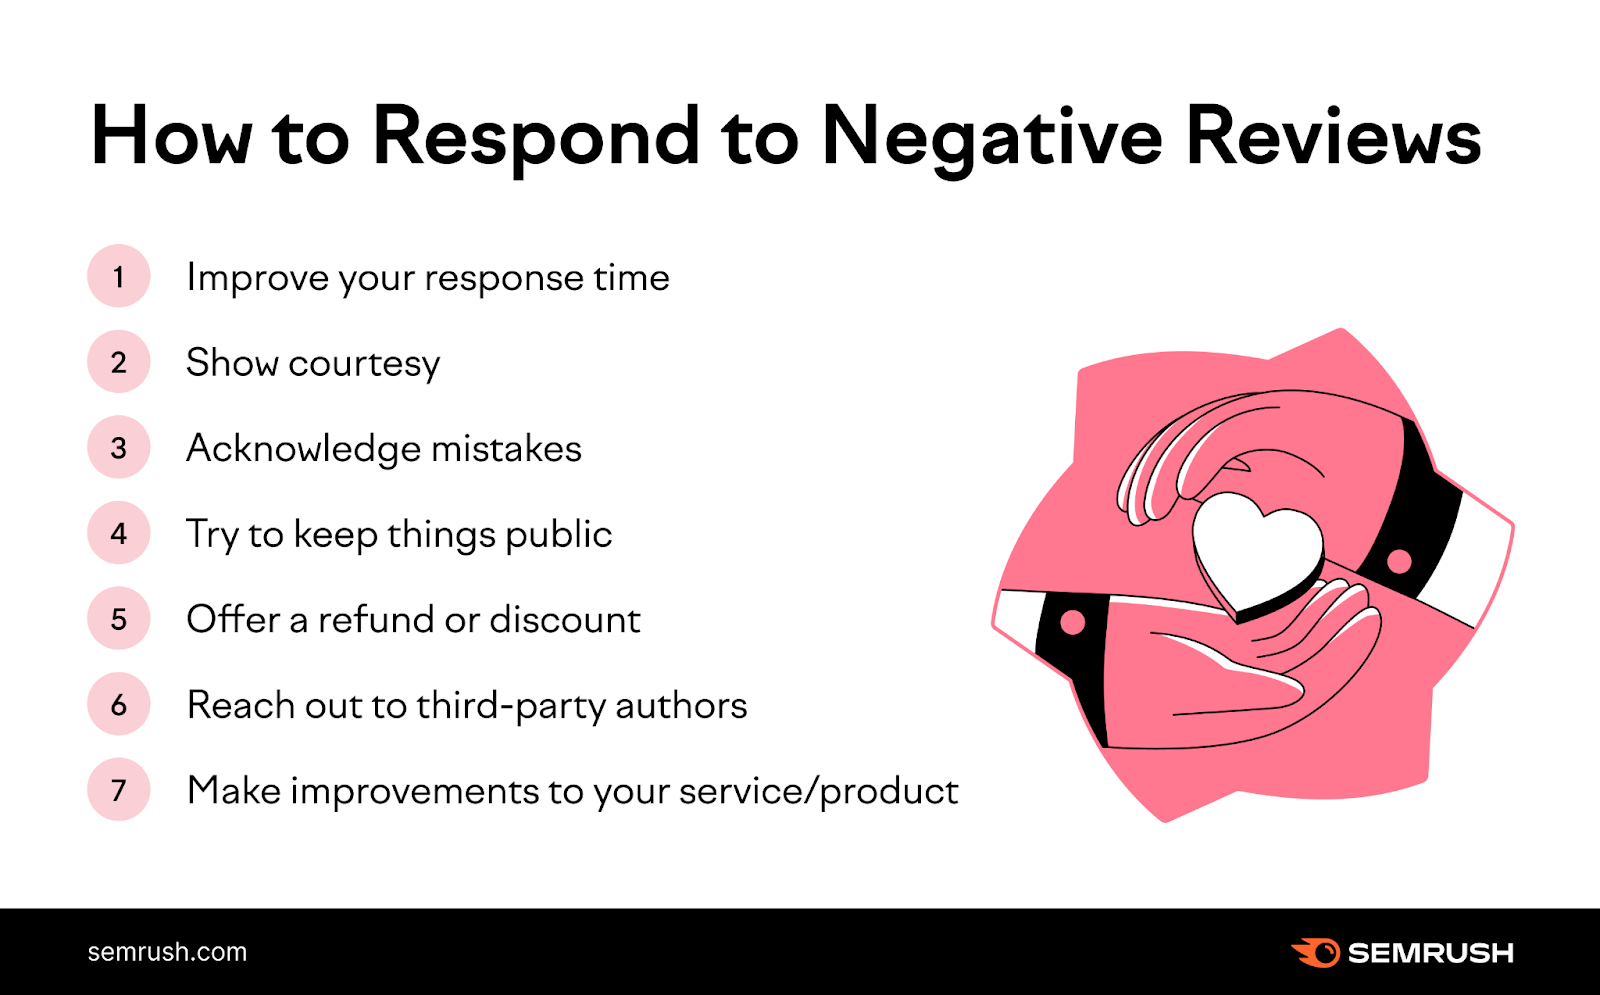 ،w to respond to negative reviews